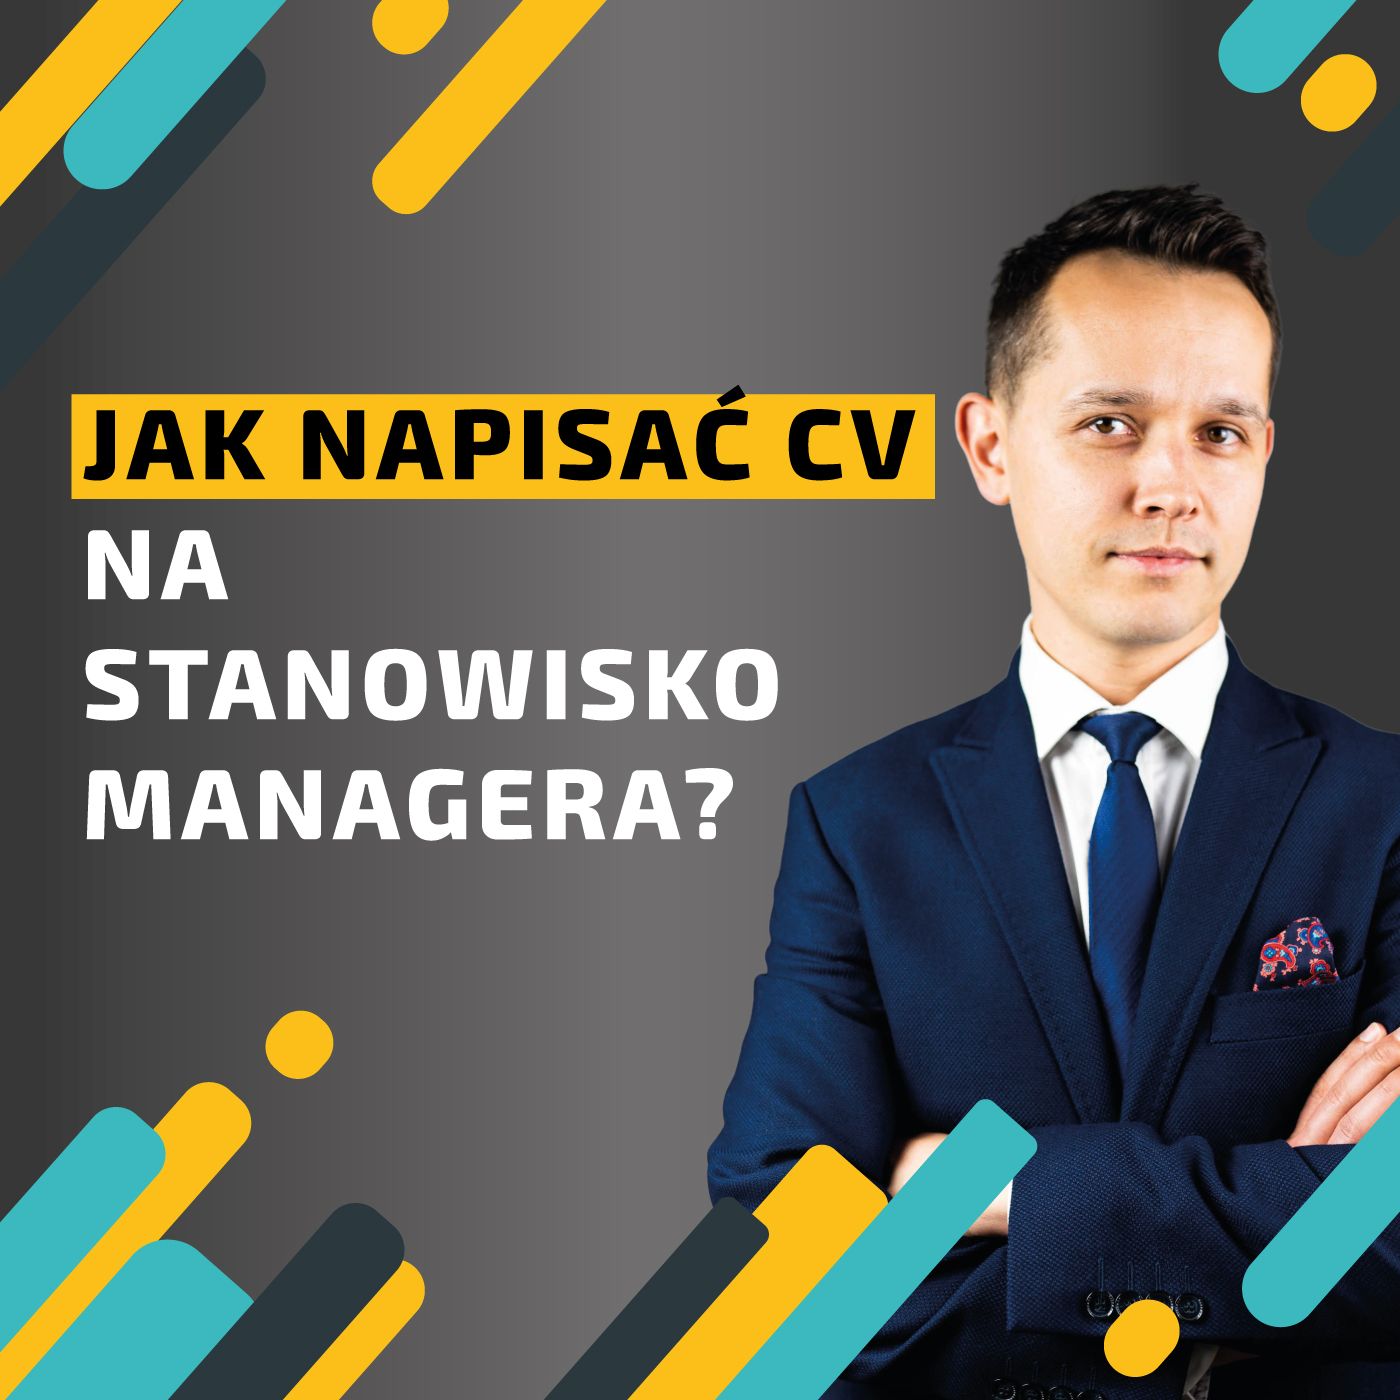 Jak napisać CV do pracy na stanowisko managera? Natalia Bogdan